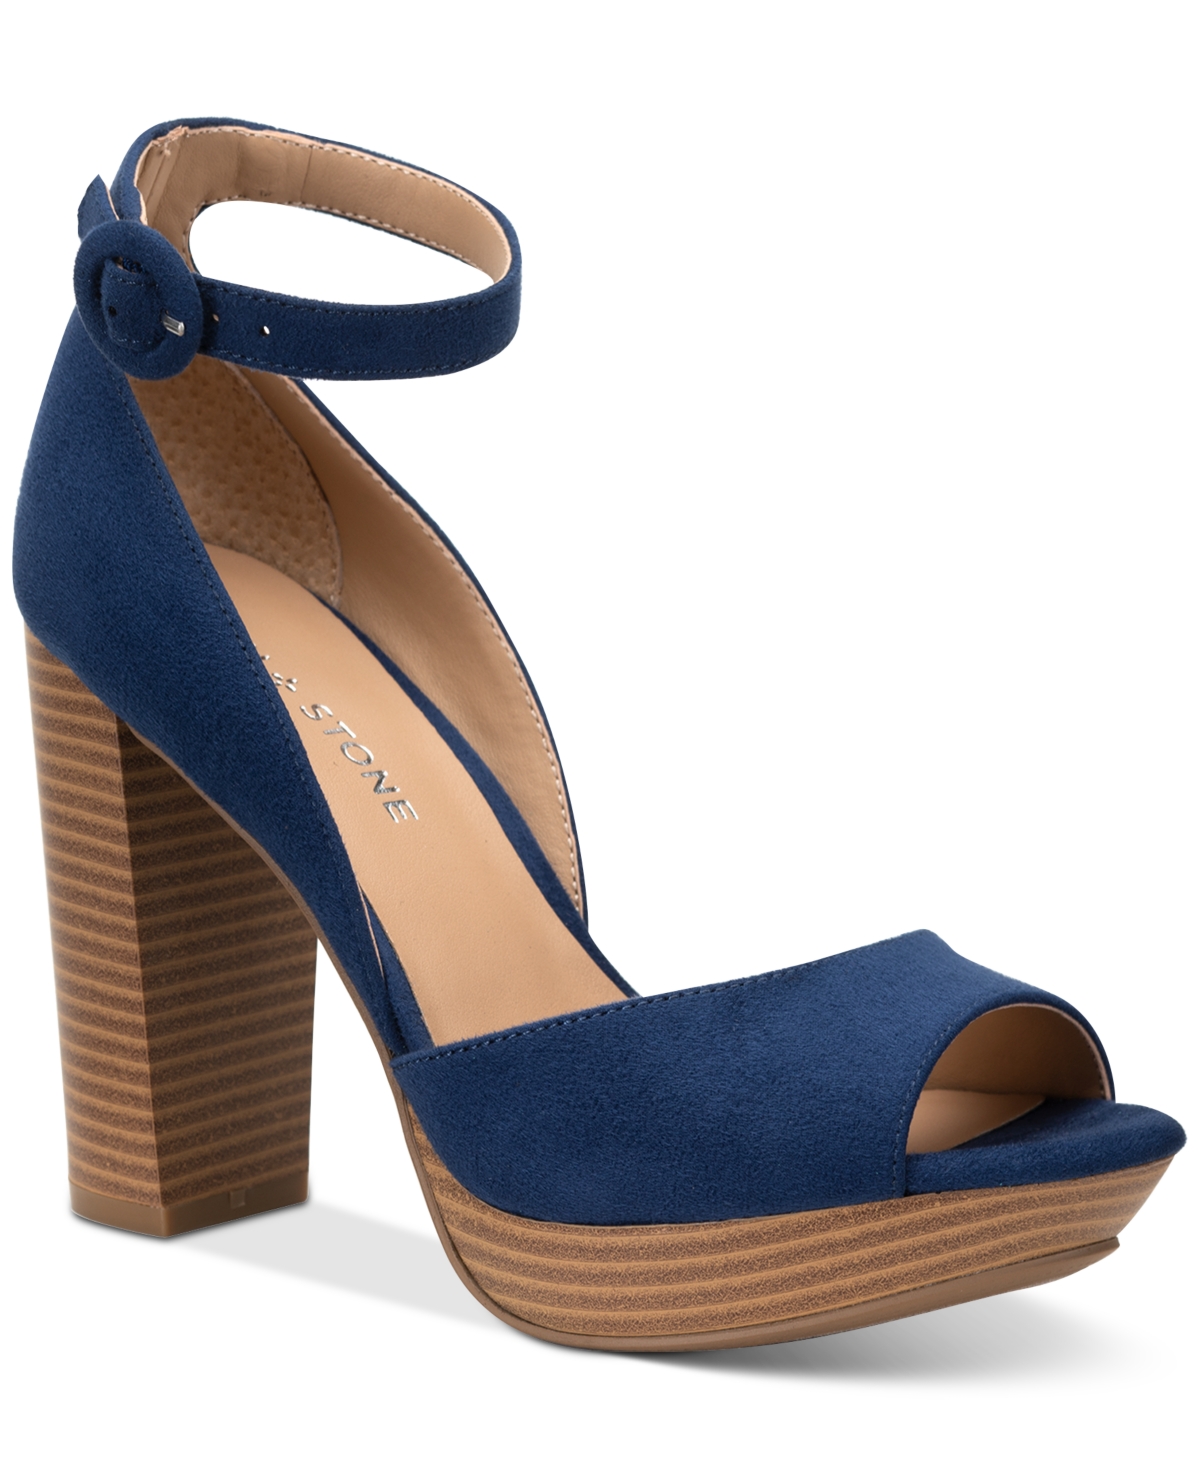 Reeta Block-Heel Platform Sandals, Created for Macy's - Blue Stack